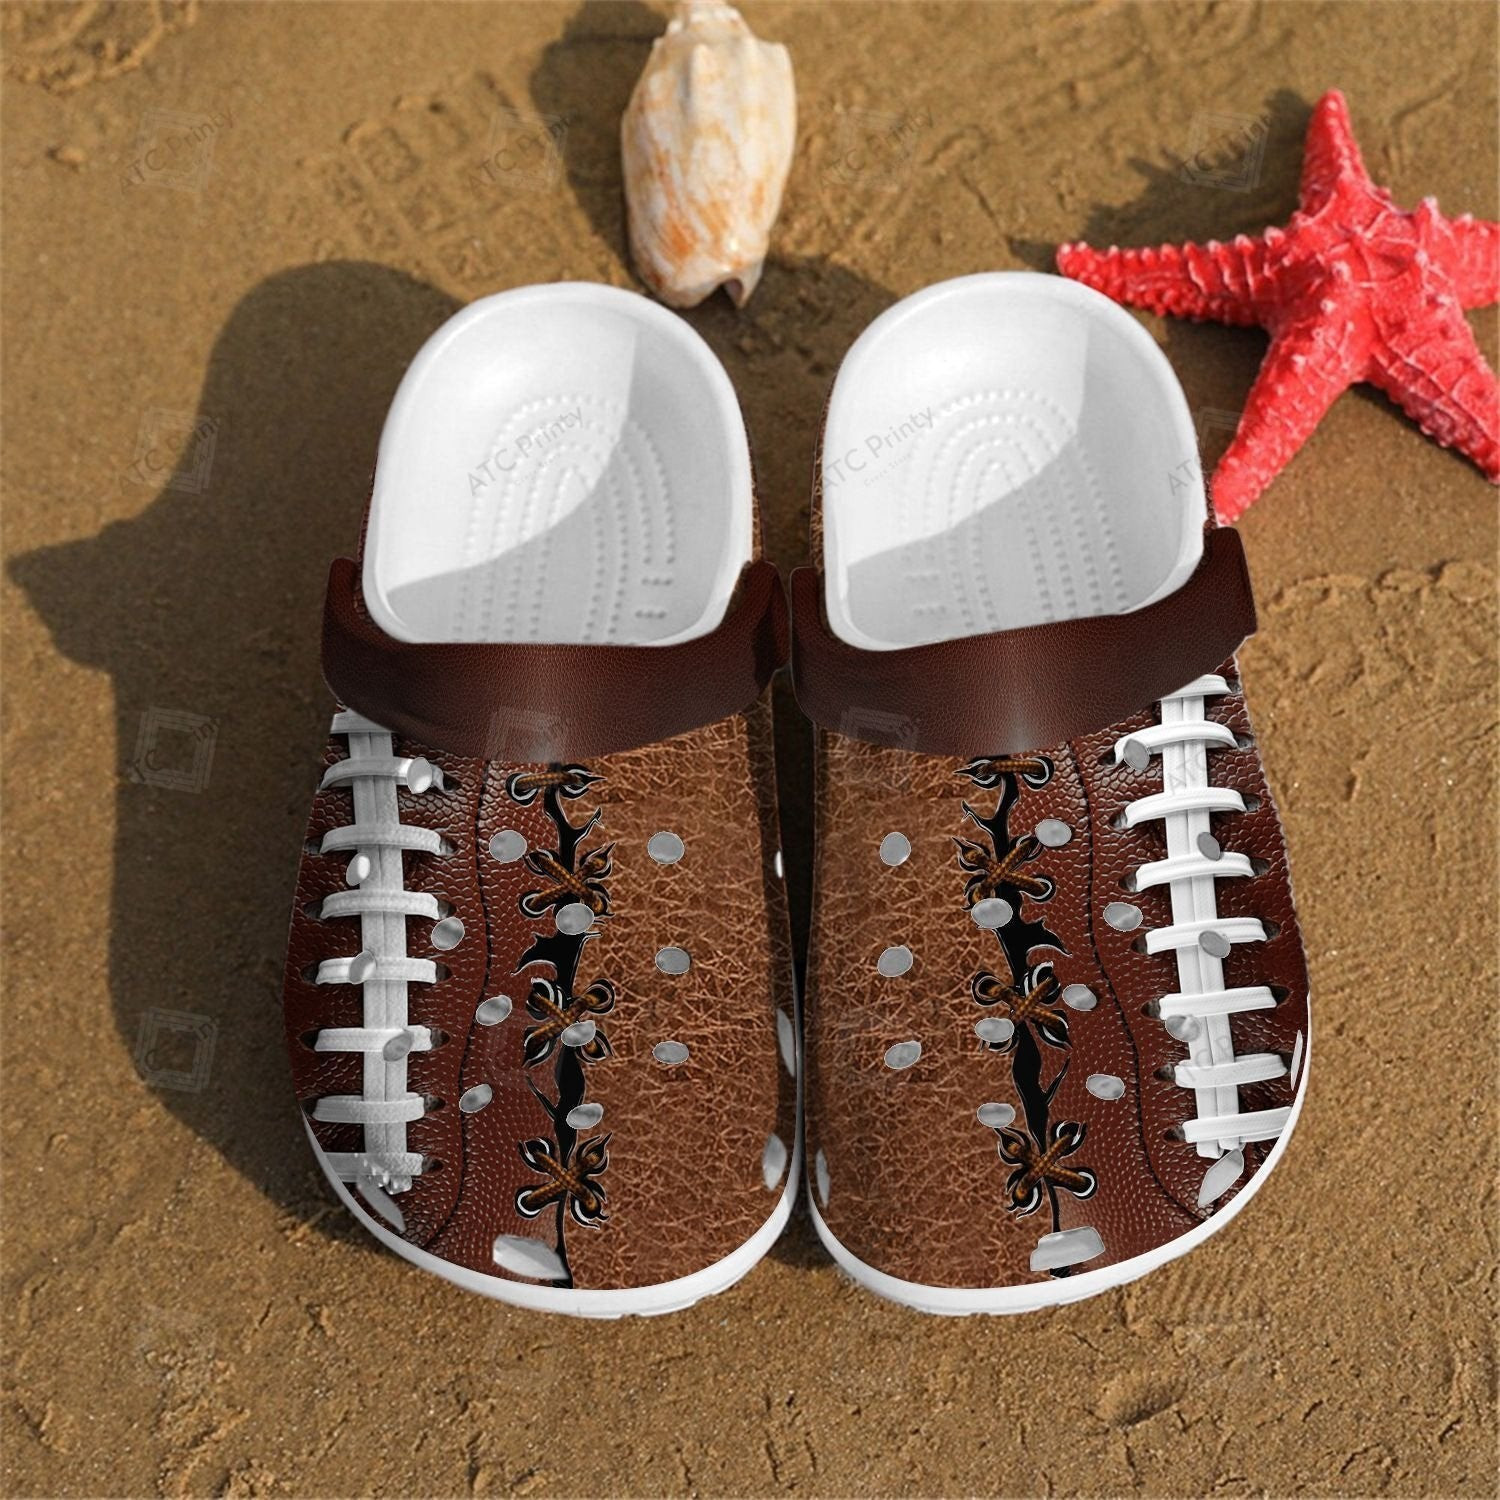 Leather Softball Crocs Shoes Crocbland Clog Gifts For Grandpa